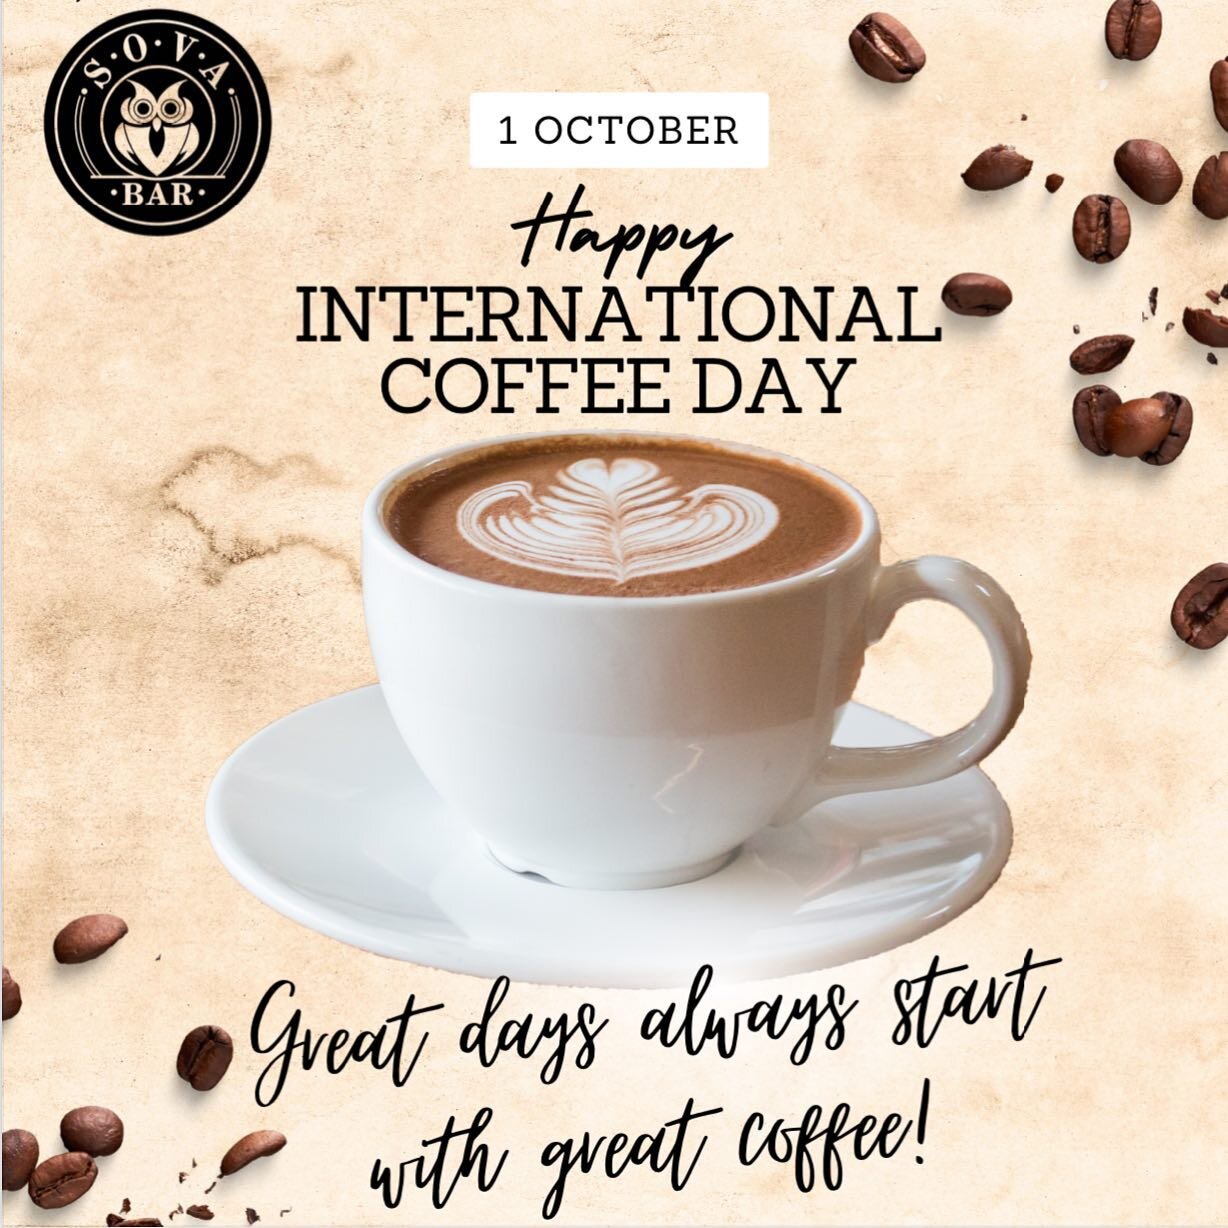 Happy international coffee day.